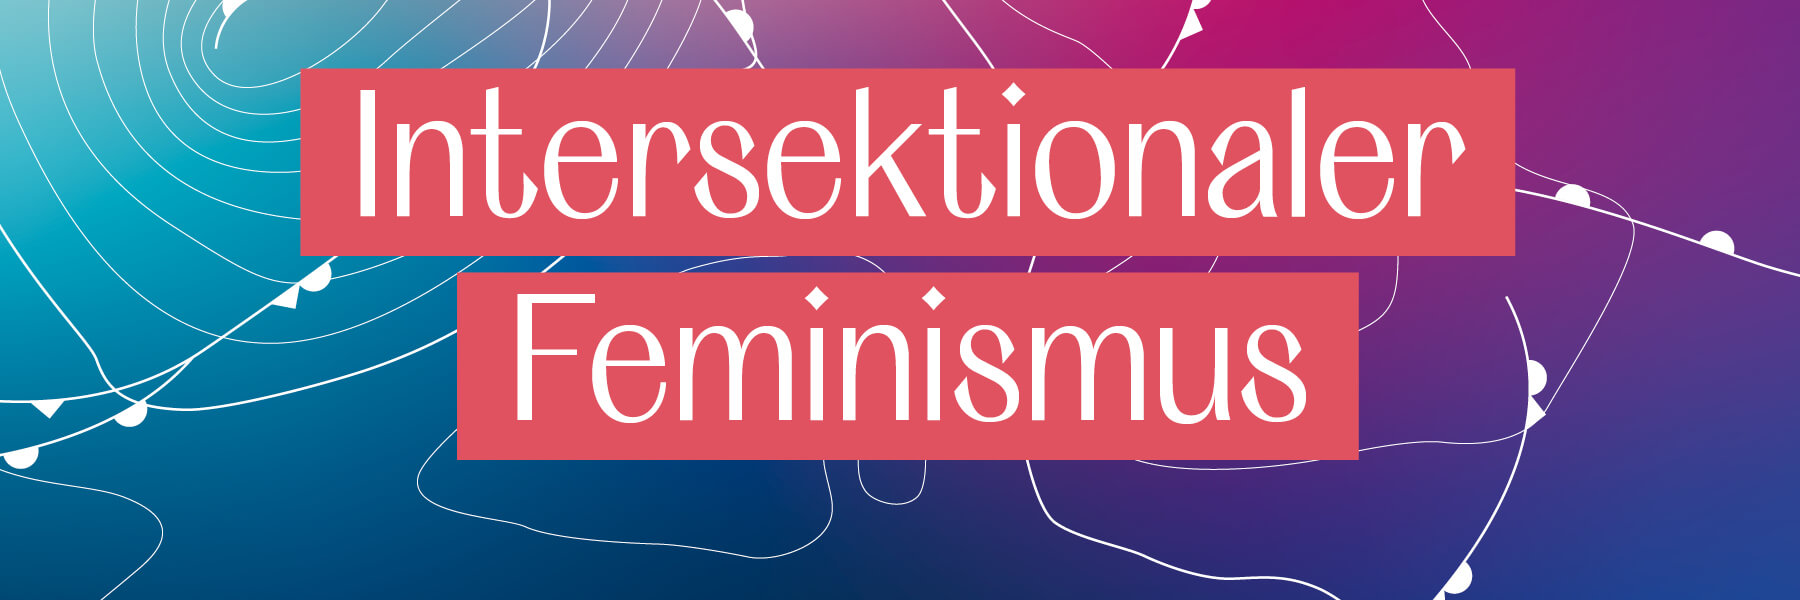 FES Gende rGlossar - Intersektionaler Feminismus